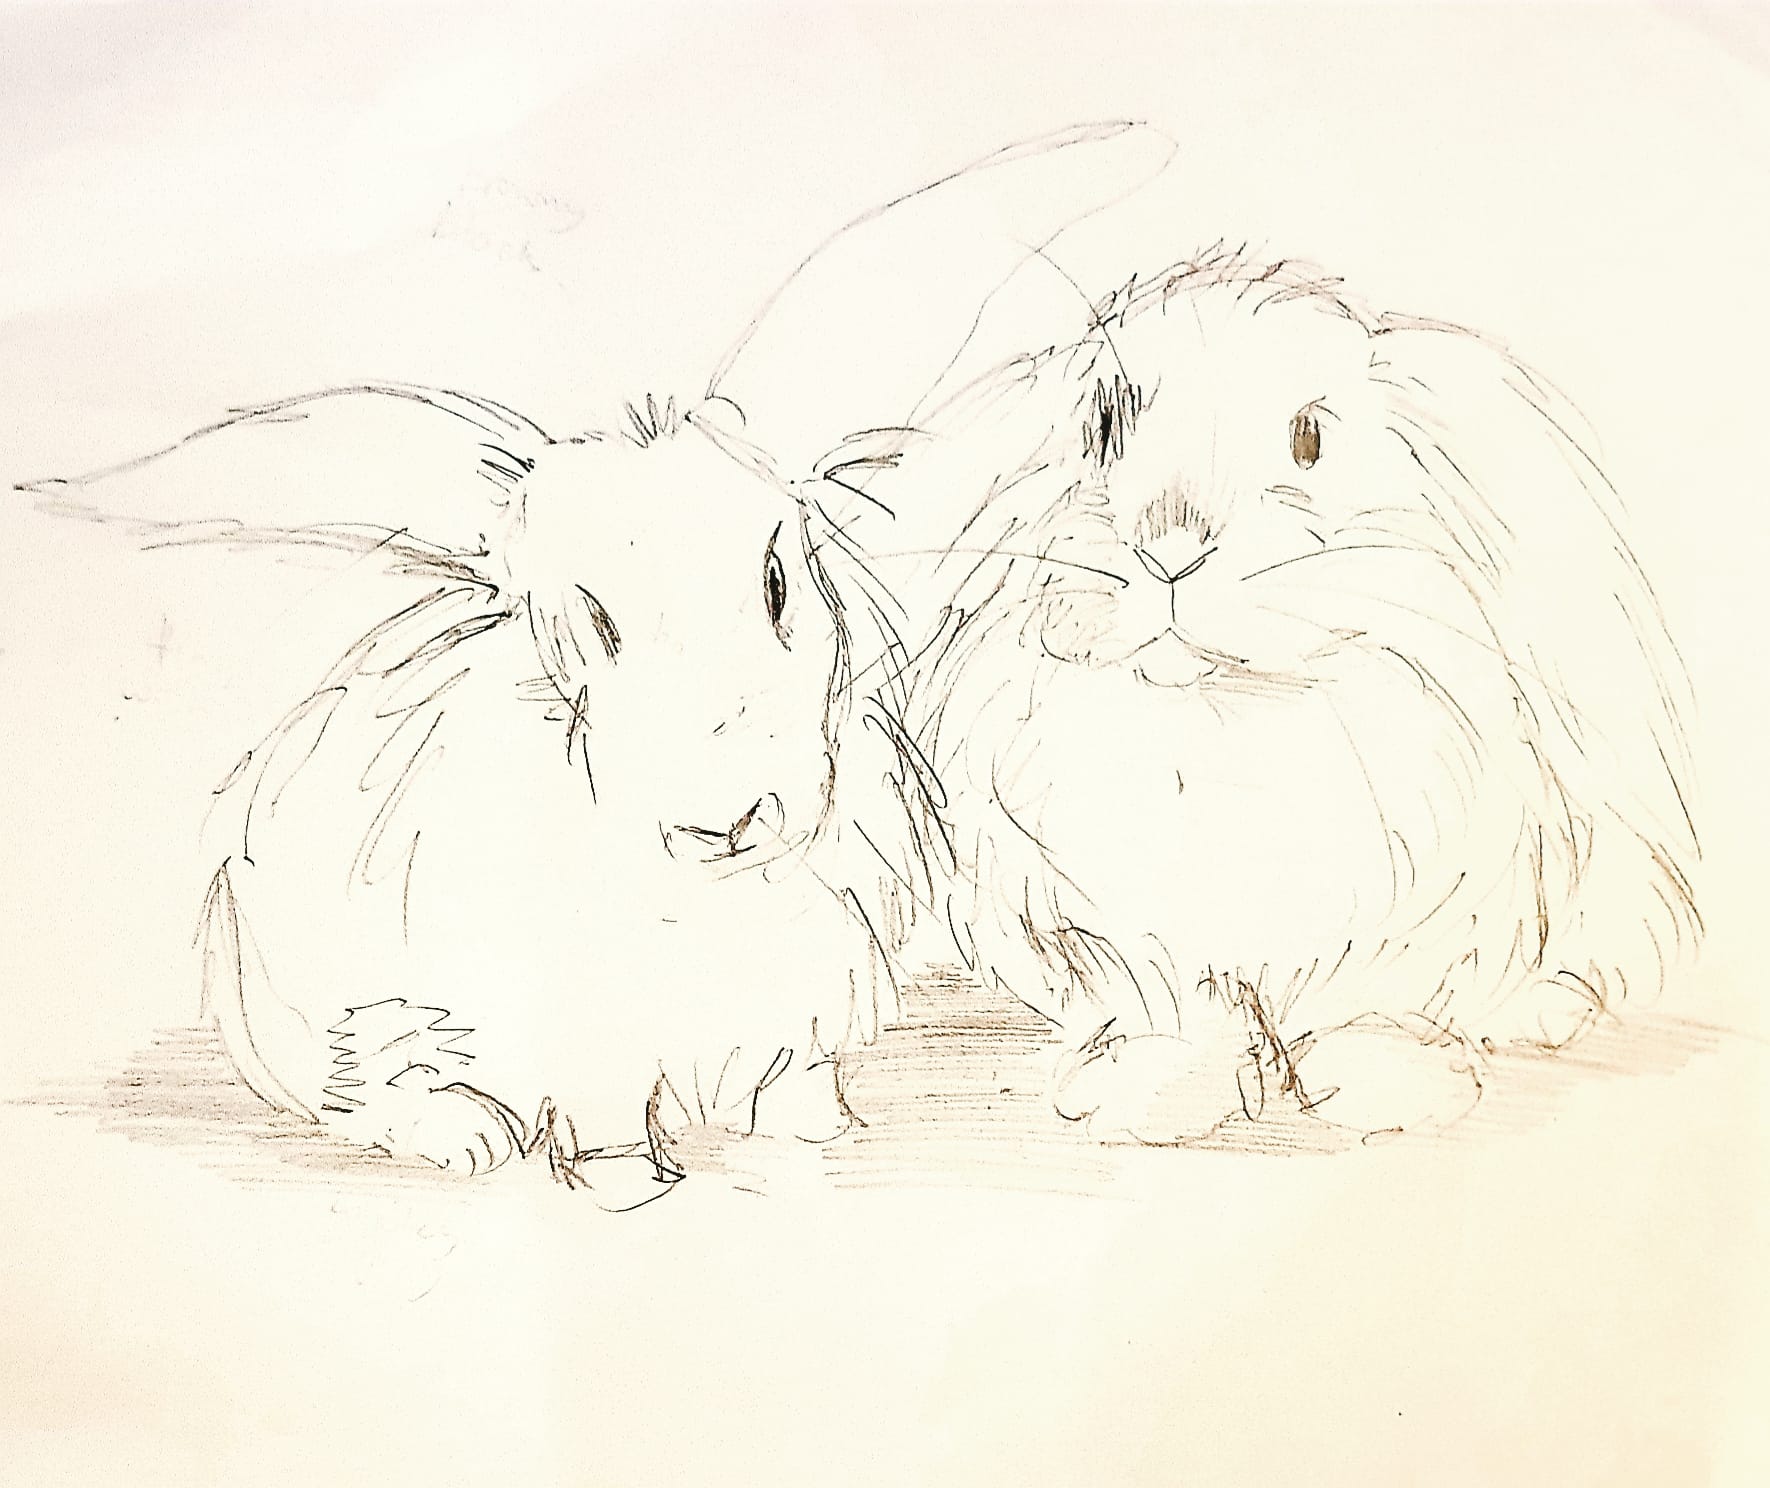 Custom Sketch Bunny Portraits